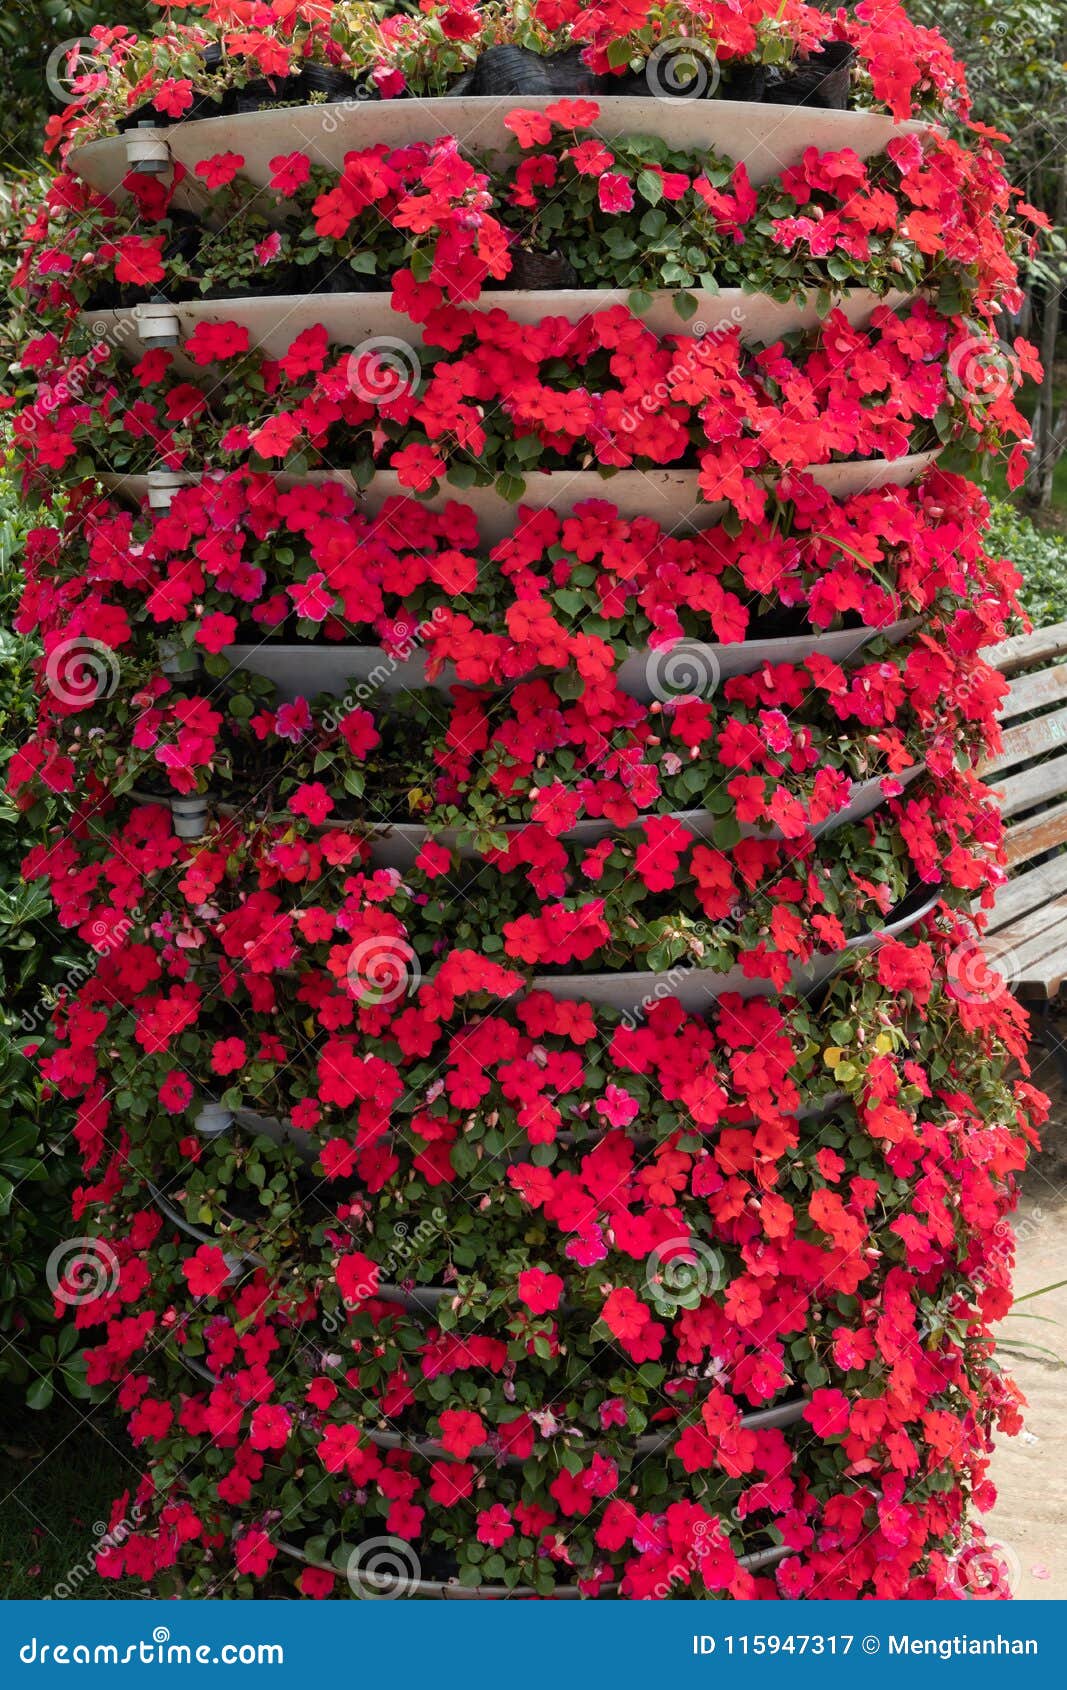 Impatiens Street Flower Bed Stock Image Image Of Grass Elliptical 115947317